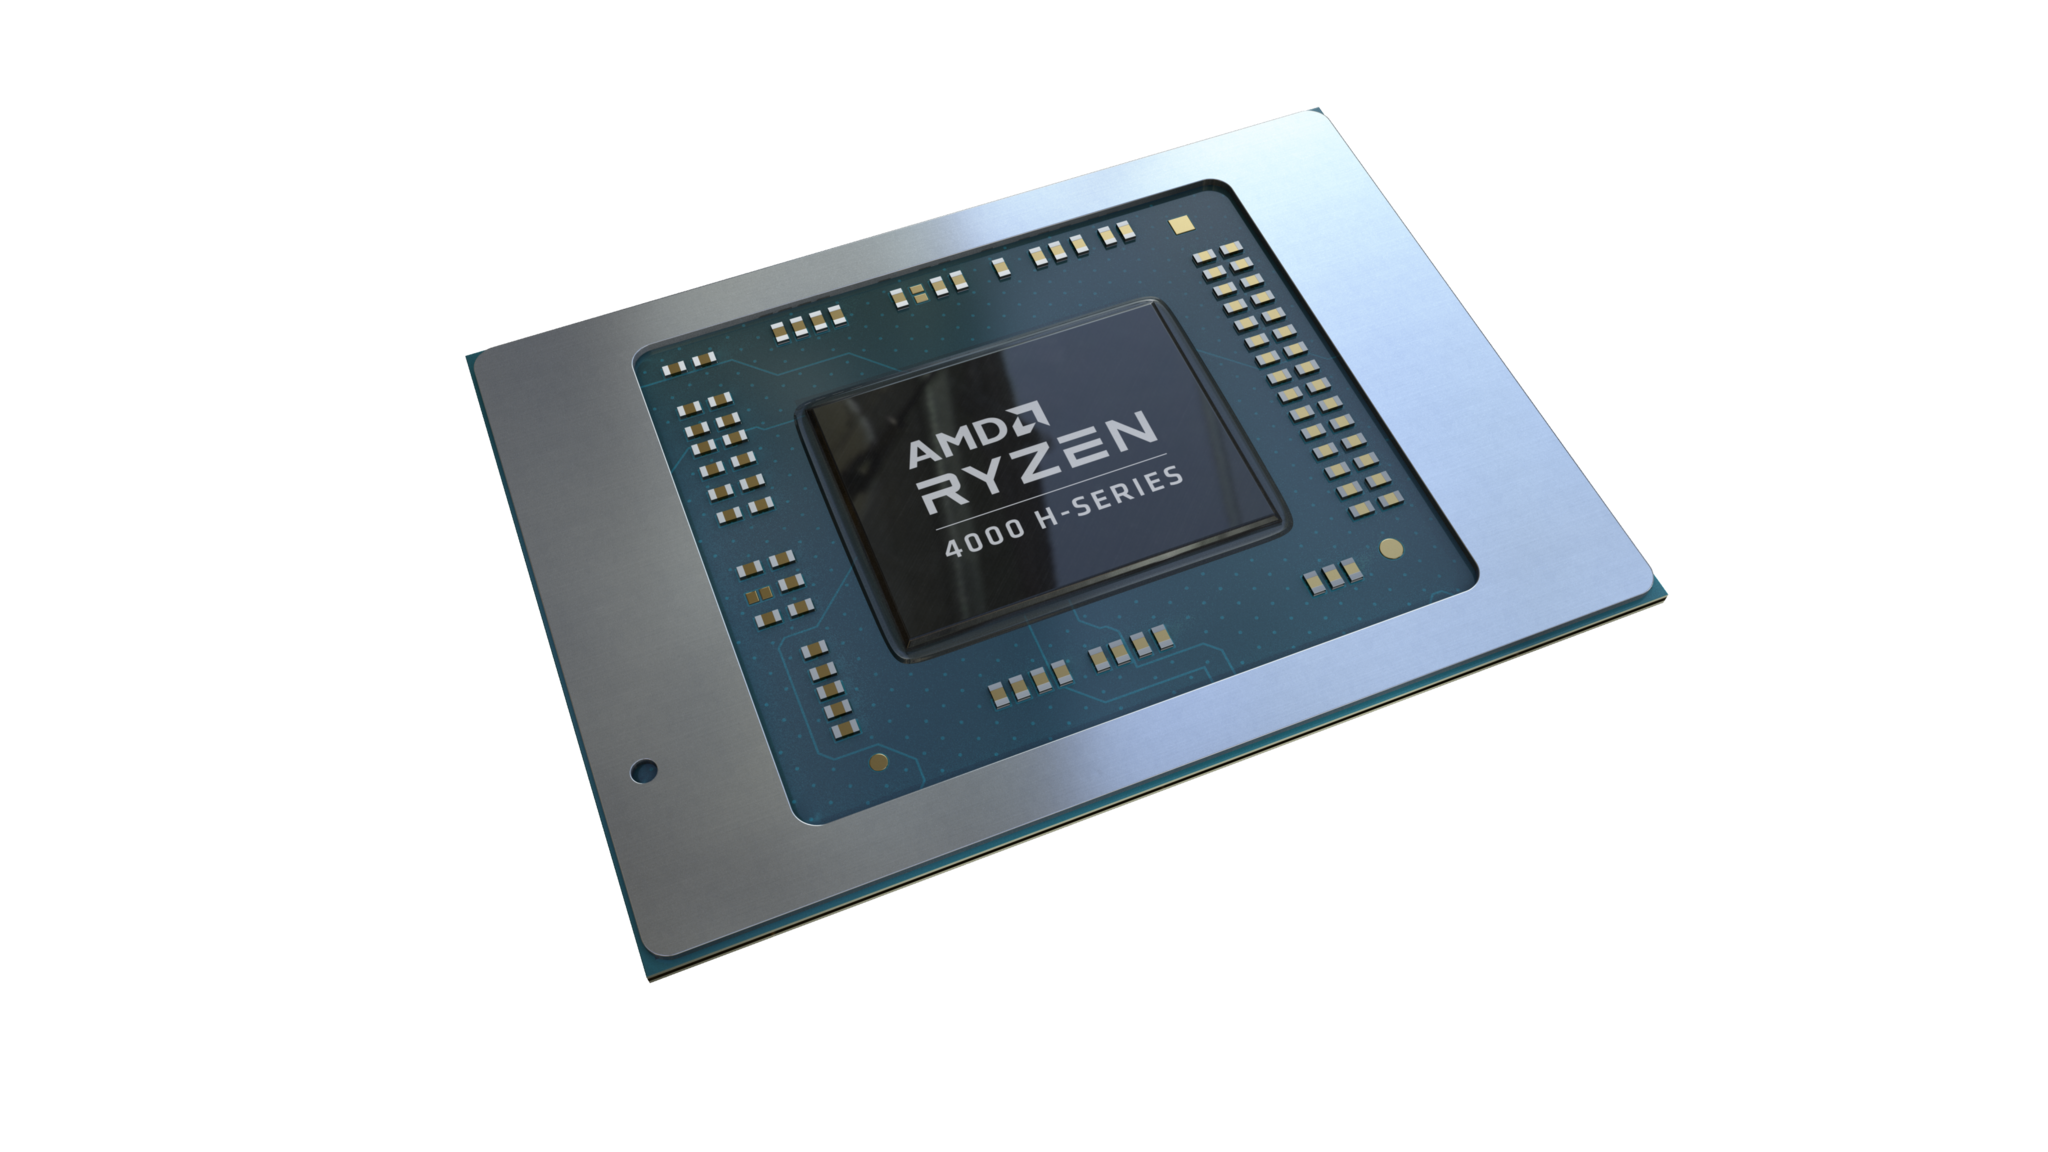 1 AMD เผยรายละเอียดเพิ่มเติมของโปรเซสเซอร์ AMD Ryzen Mobile 4000 Series และแนะนำโปรเซสเซอร์ AMD Ryzen 9 4000H Series สำหรับเกมมิ่งโน๊ตบุ้ค